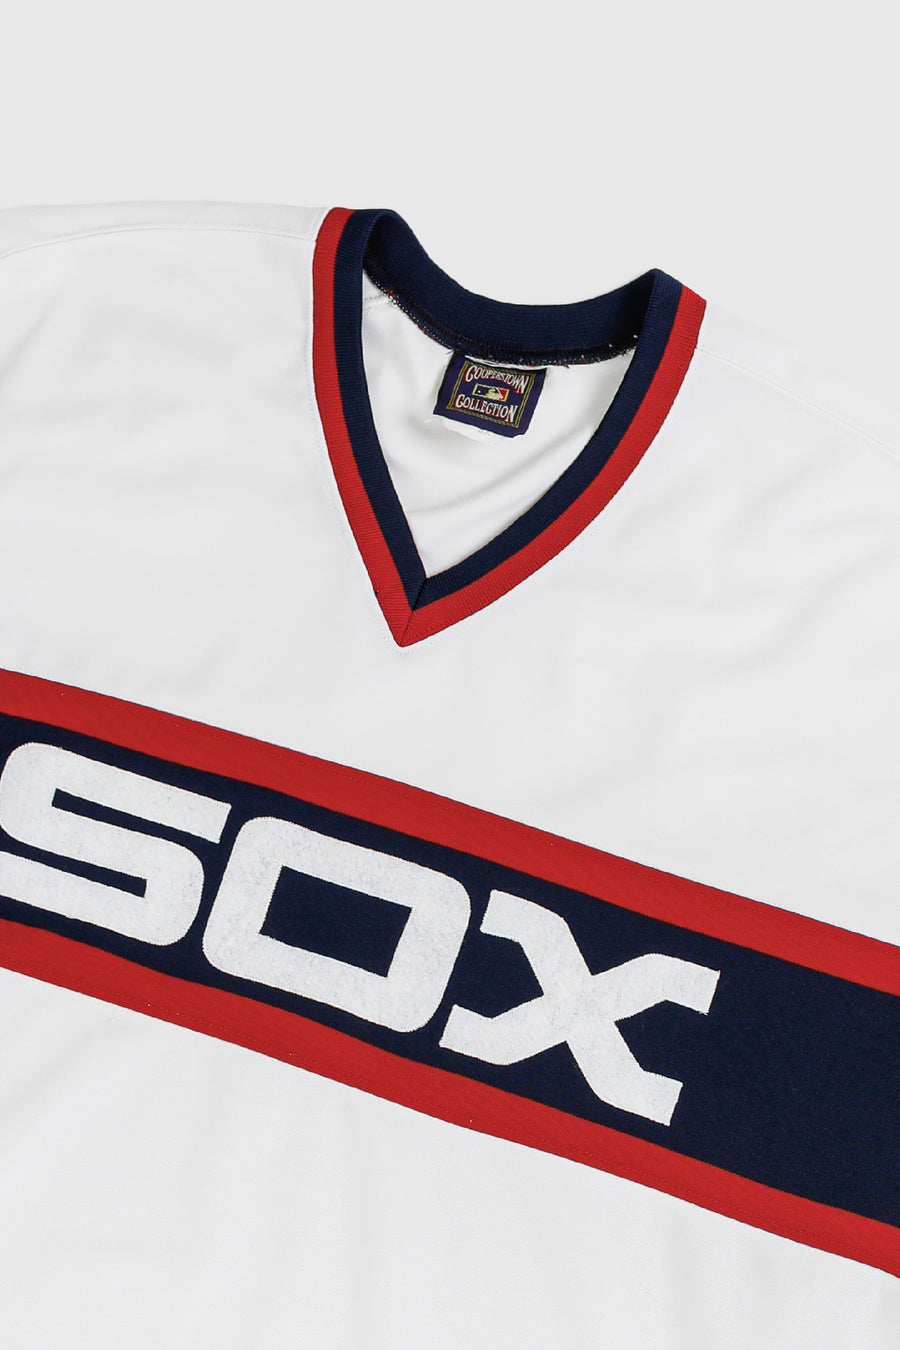 Vintage White Sox Baseball Jersey - XXXL